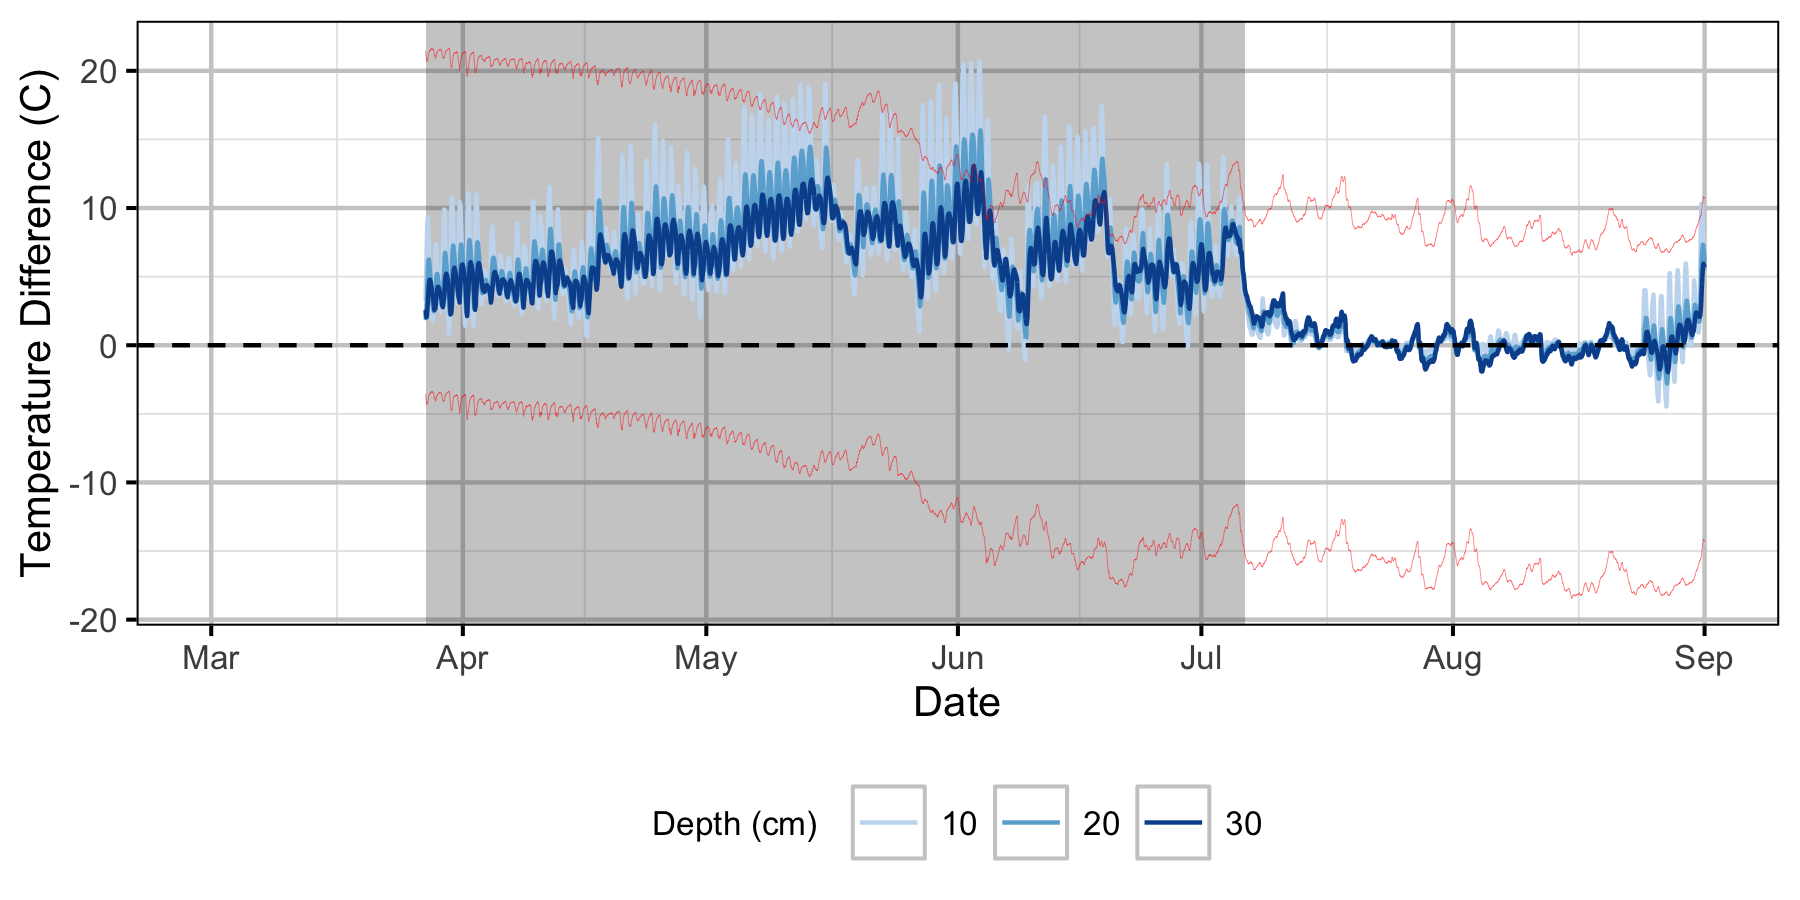 figures/Sensor Data/Relative Gravel Temperature Stations/Norns Creek Fan/Station14.png